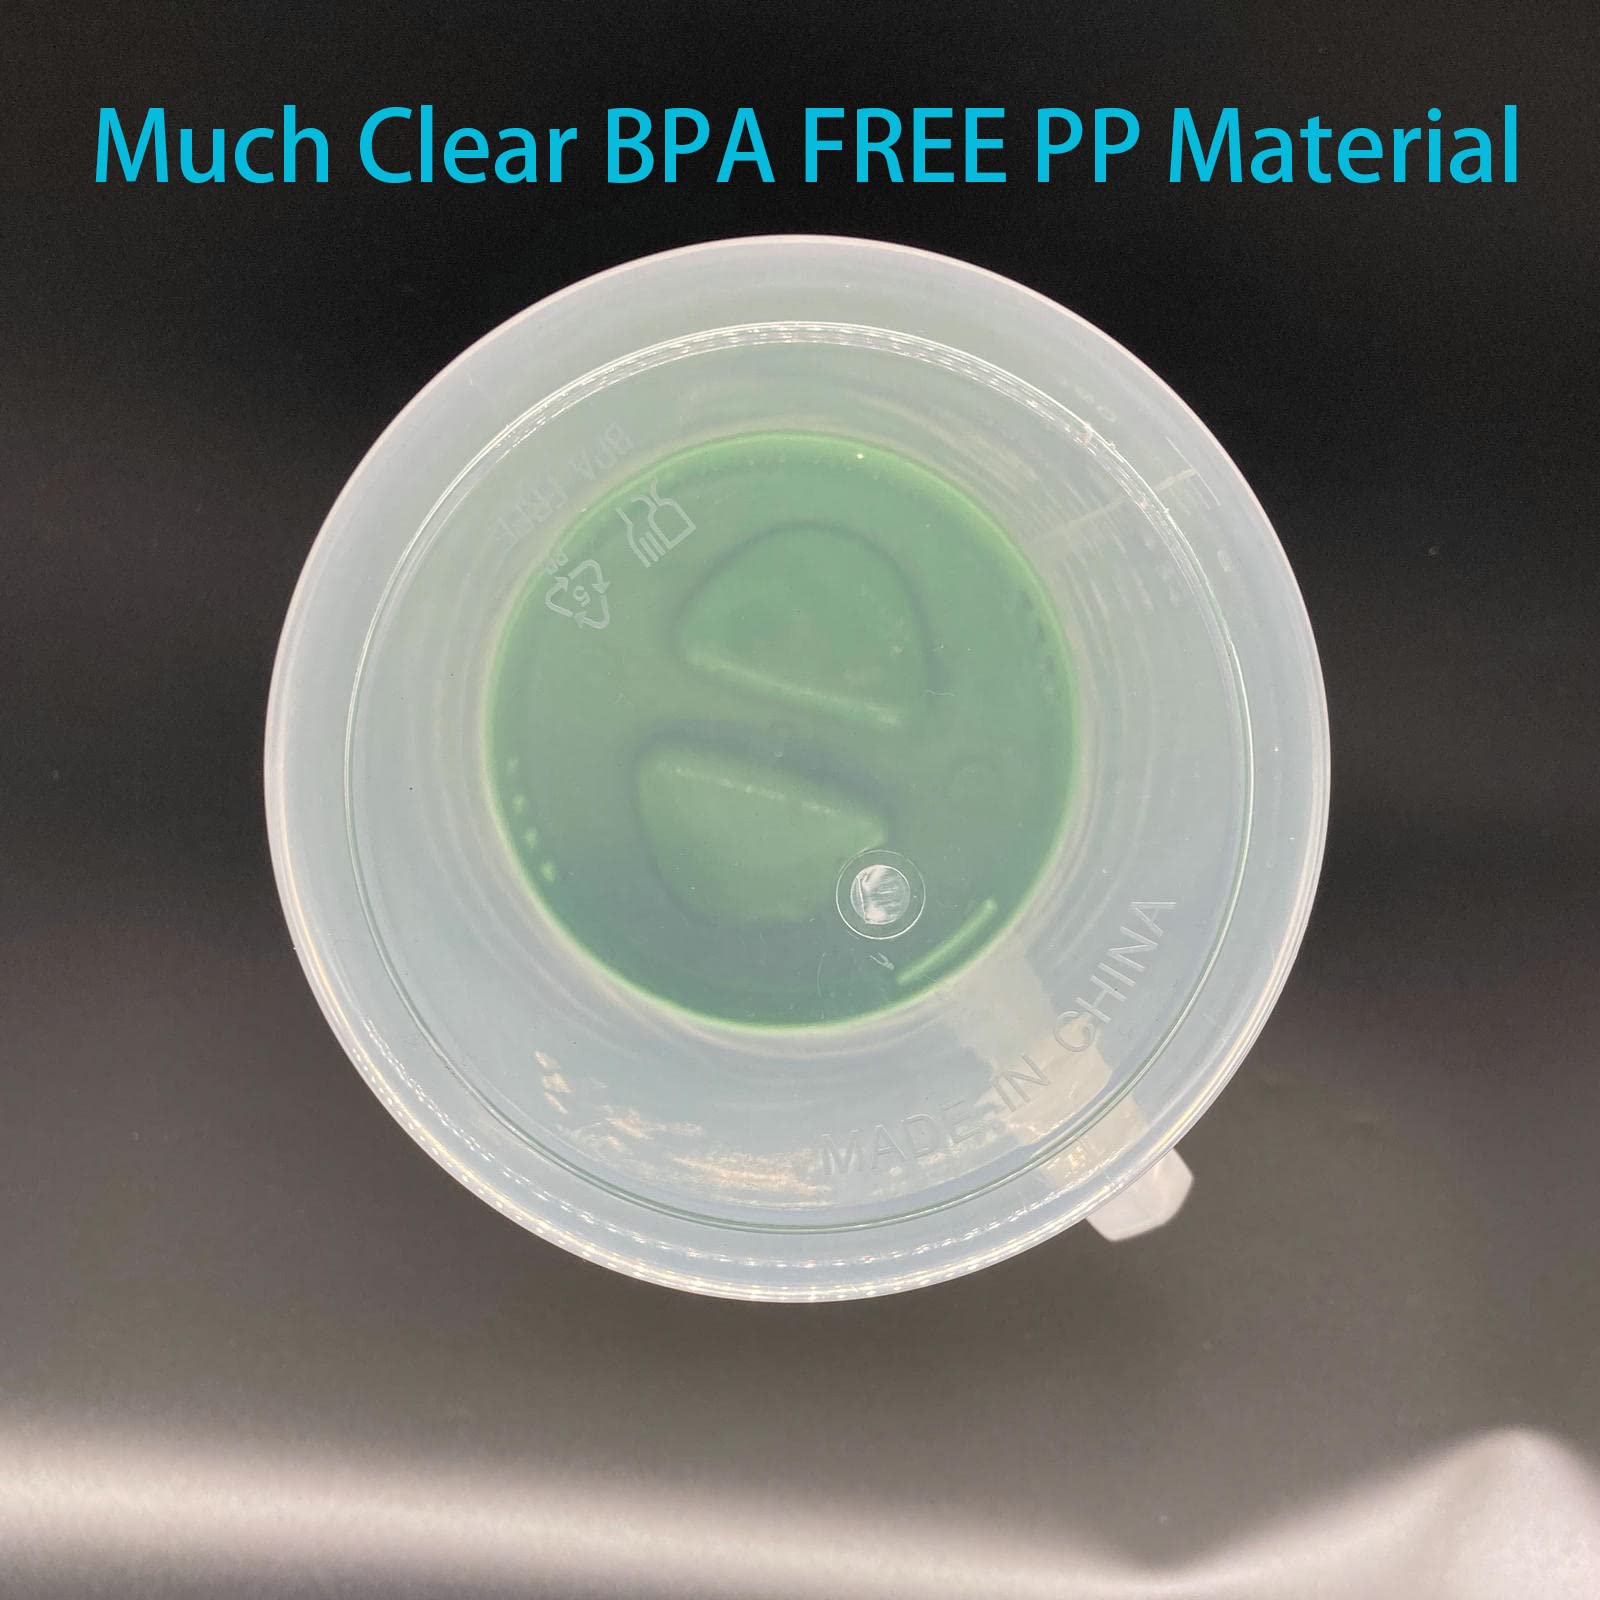 0.63 Gallon/2.4 Litre Plastic Pitcher with Lid BPA-FREE Eco-Friendly Carafes Mix Drinks Water Jug for Hot/Cold Lemonade Juice Beverage Jar Ice Tea Kettle (81oz, Blue)